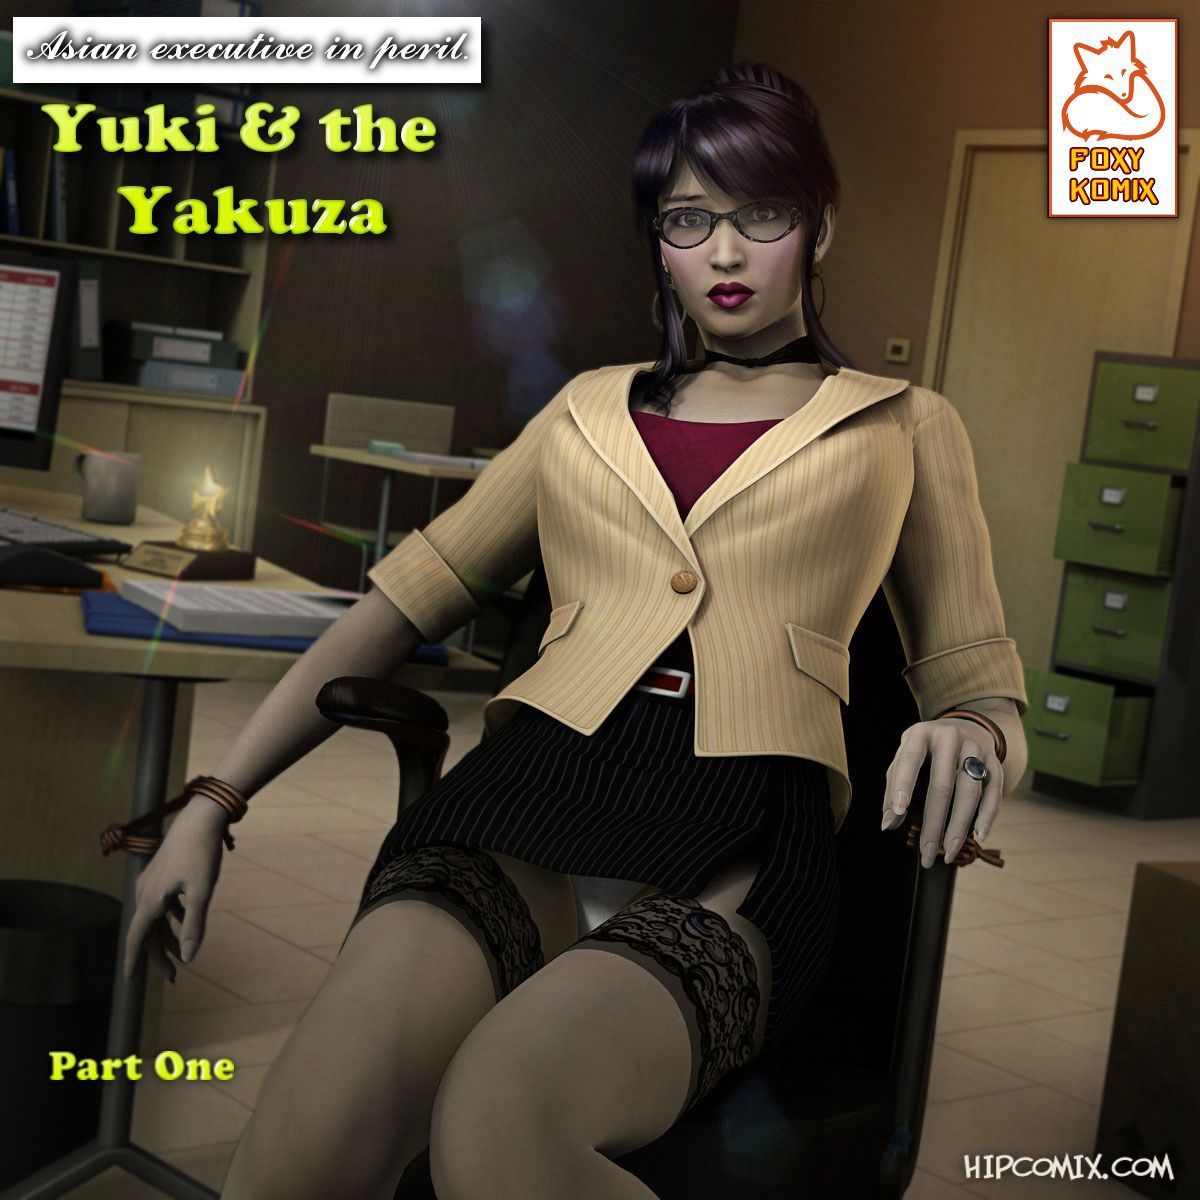 [foxy komix] Yuki i w yakuza 1 2